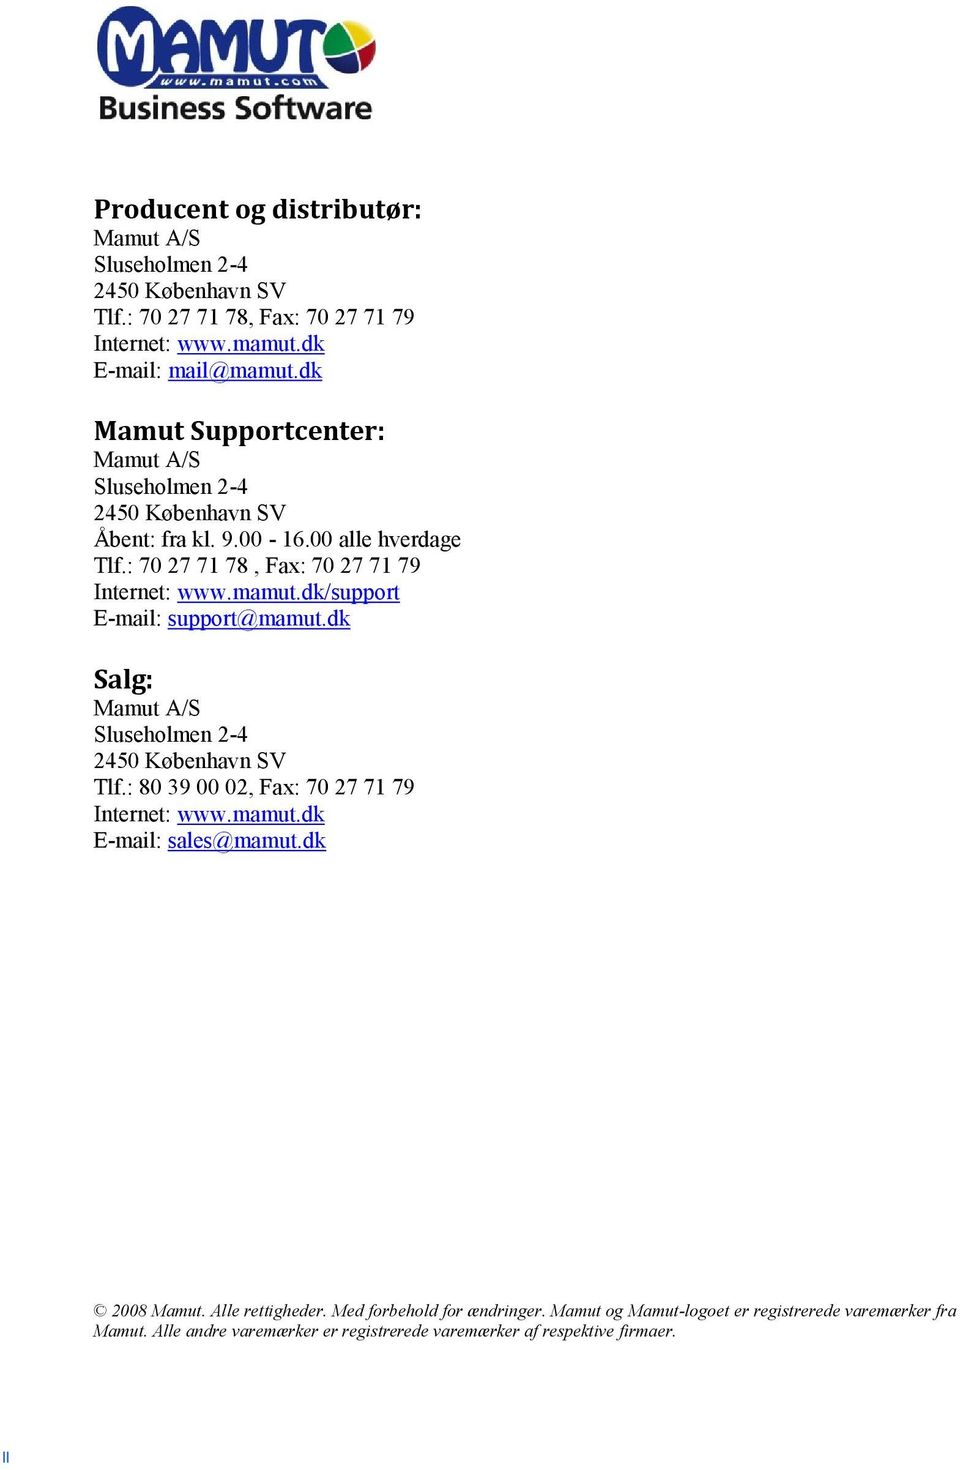 dk/support E-mail: support@mamut.dk Salg: Mamut A/S Sluseholmen 2-4 2450 København SV Tlf.: 80 39 00 02, Fax: 70 27 71 79 Internet: www.mamut.dk E-mail: sales@mamut.